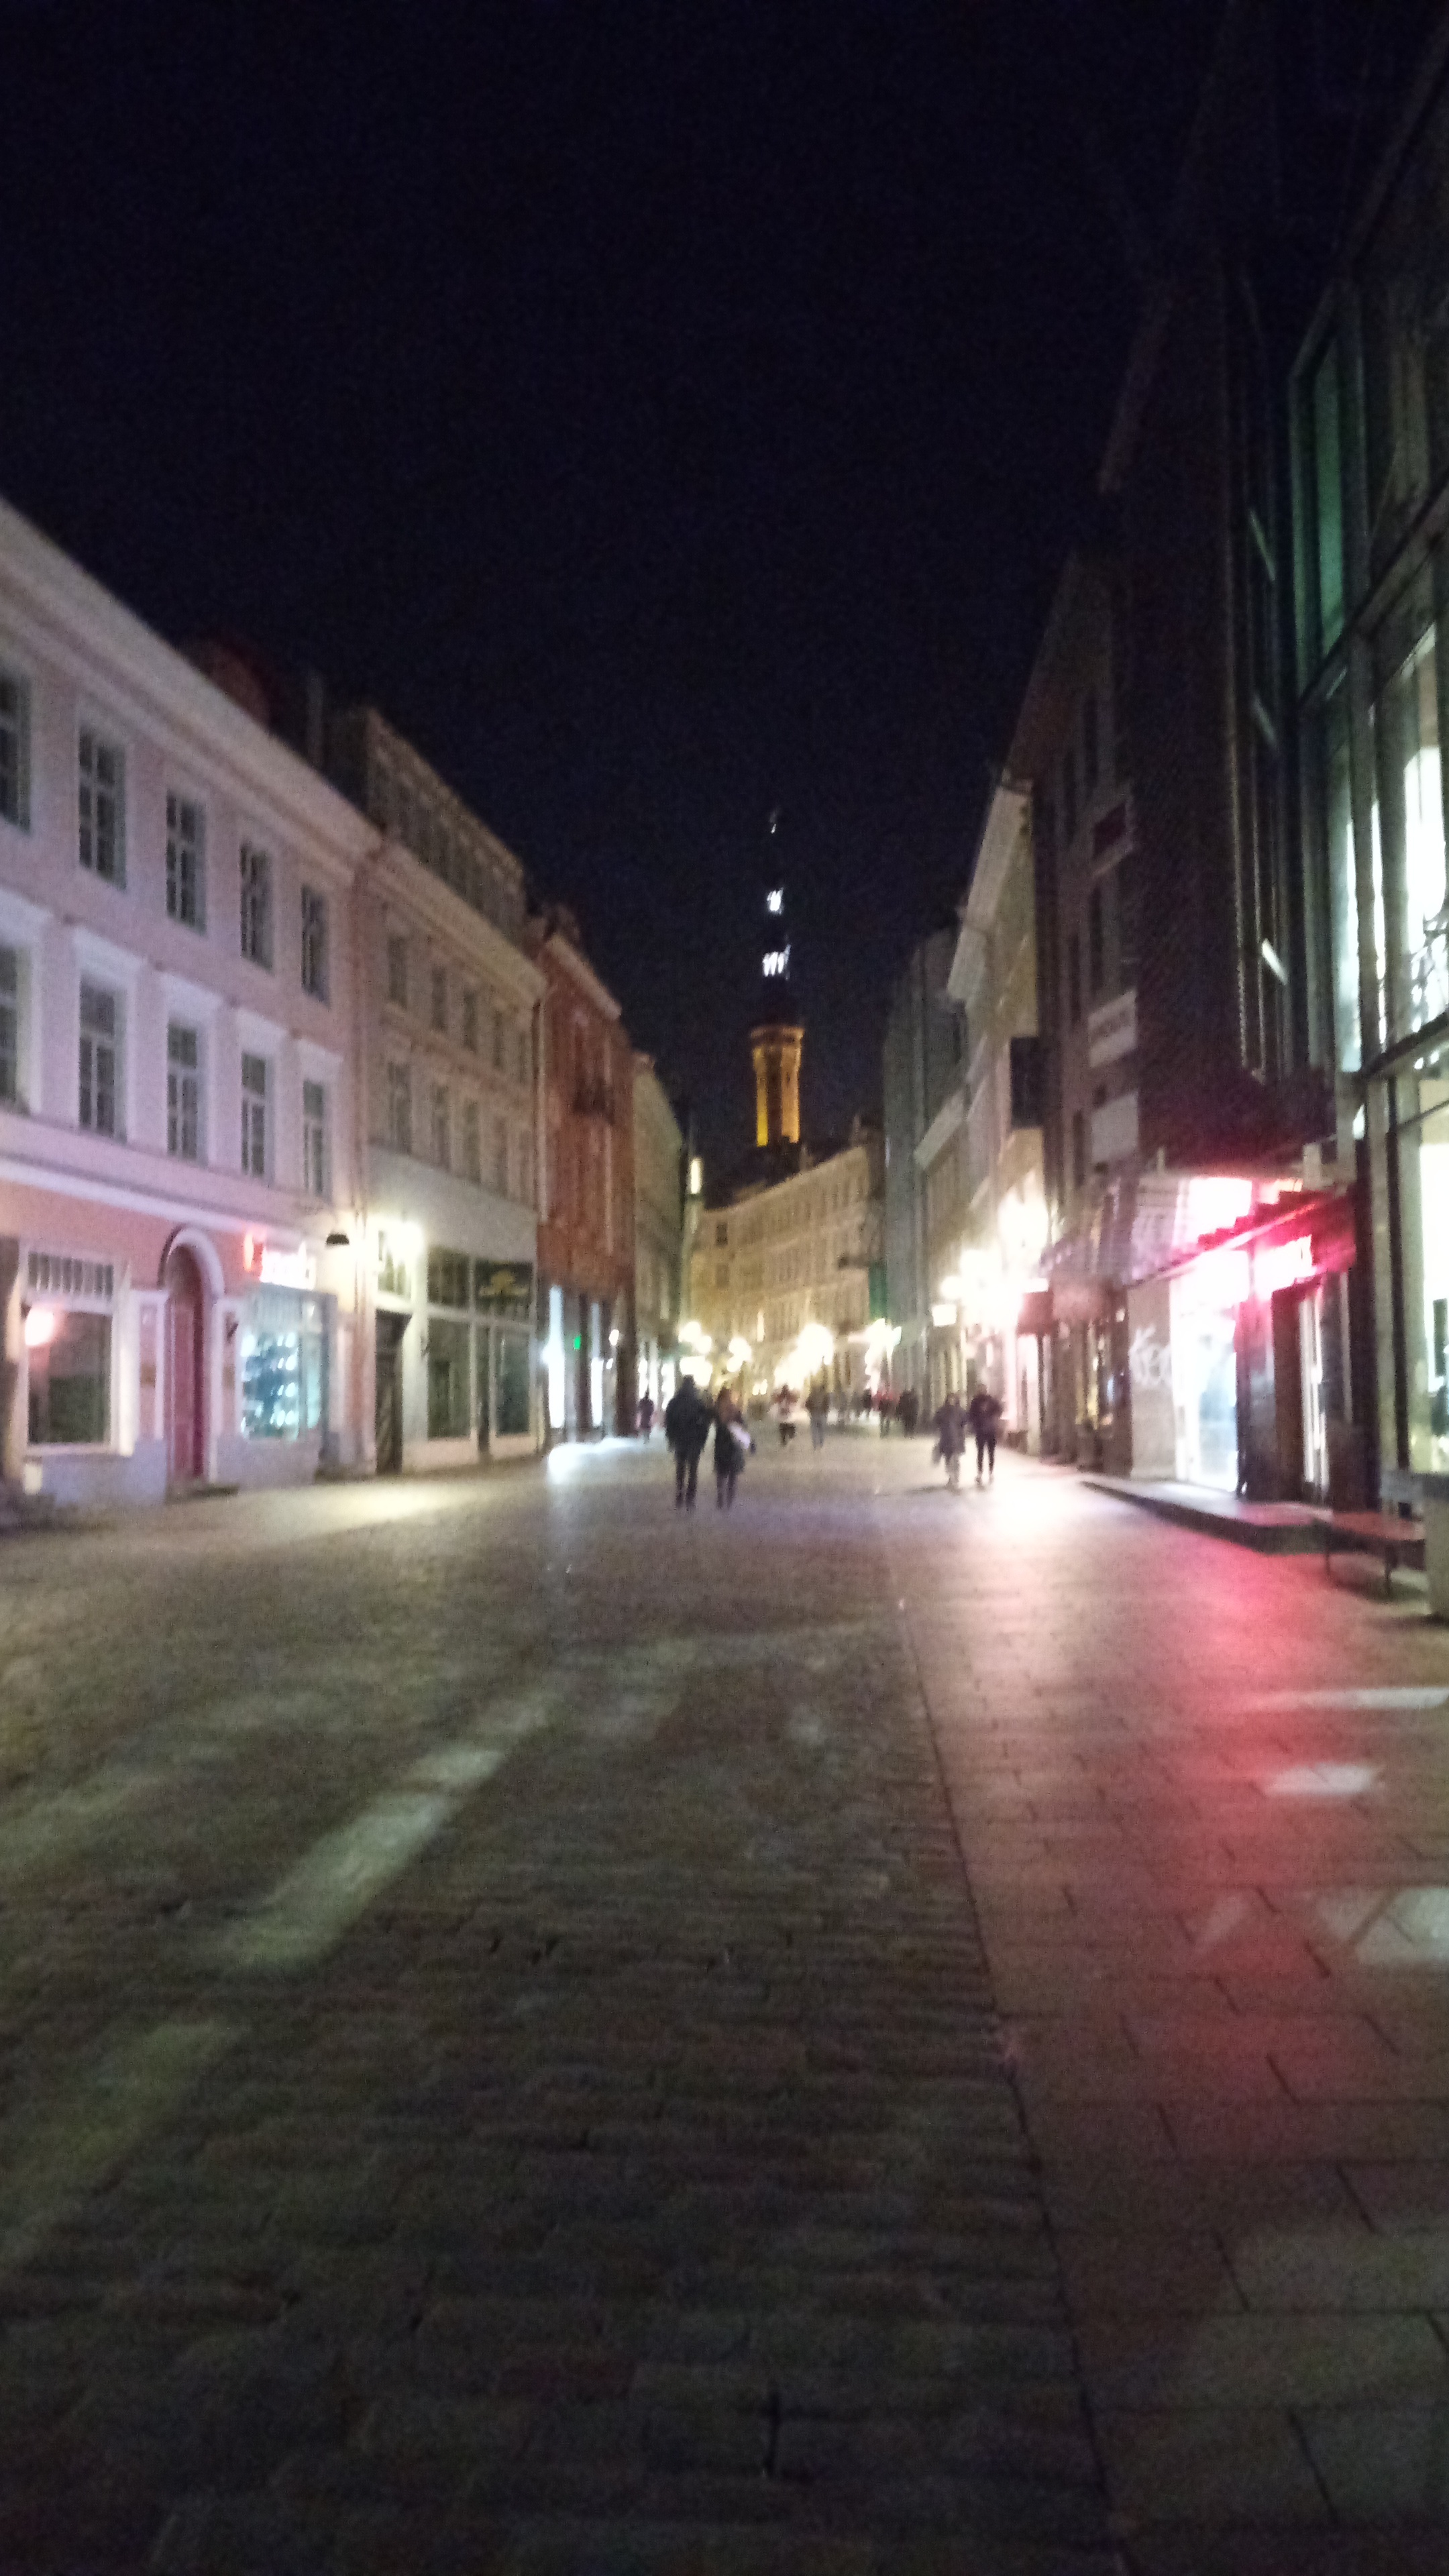 Viru Street in Tallinn Old Town rephoto